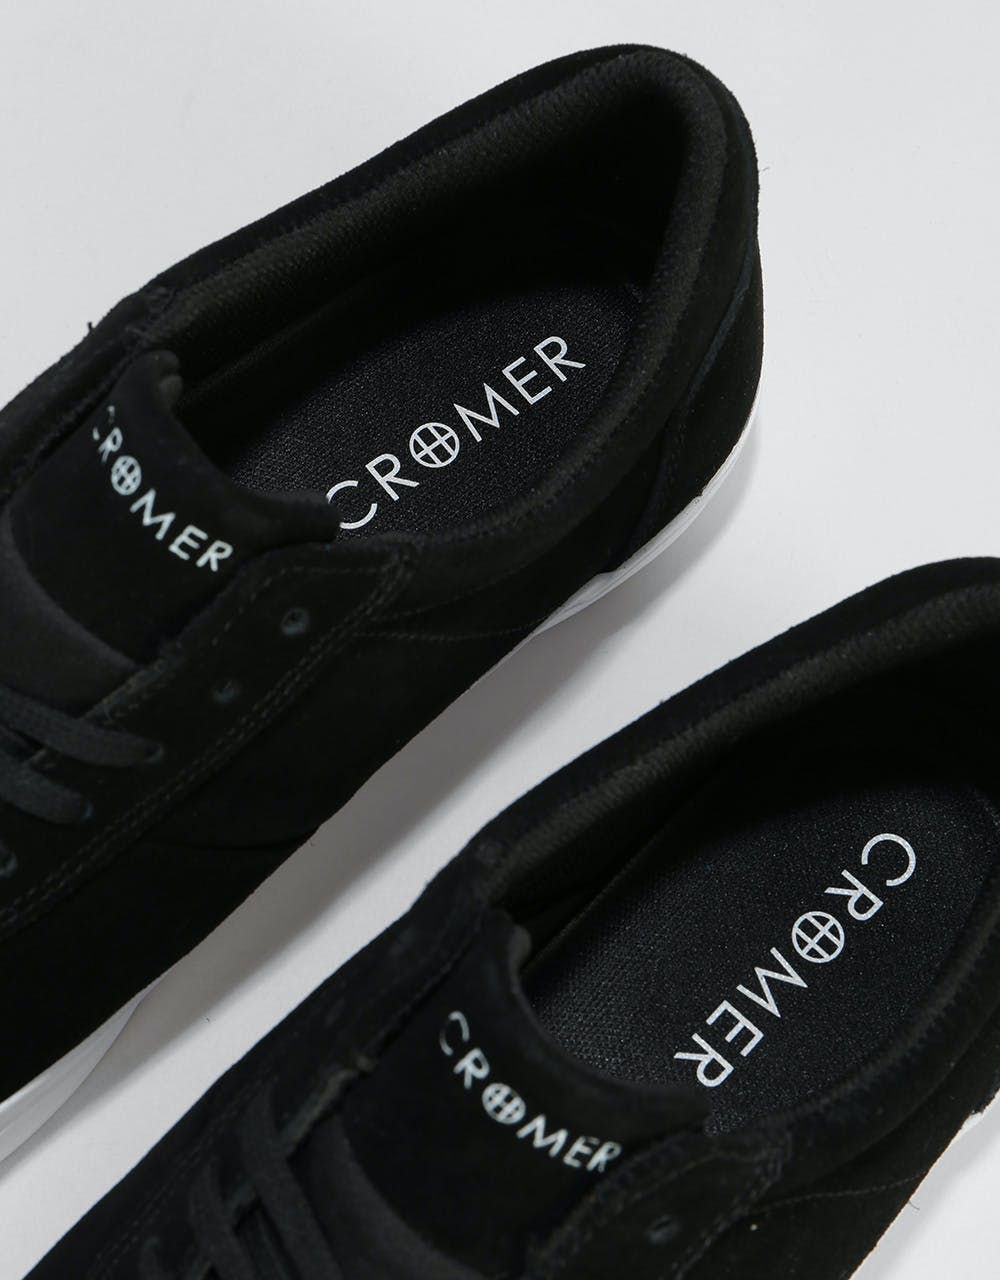 HUF Cromer 2 Skate Shoes - Black